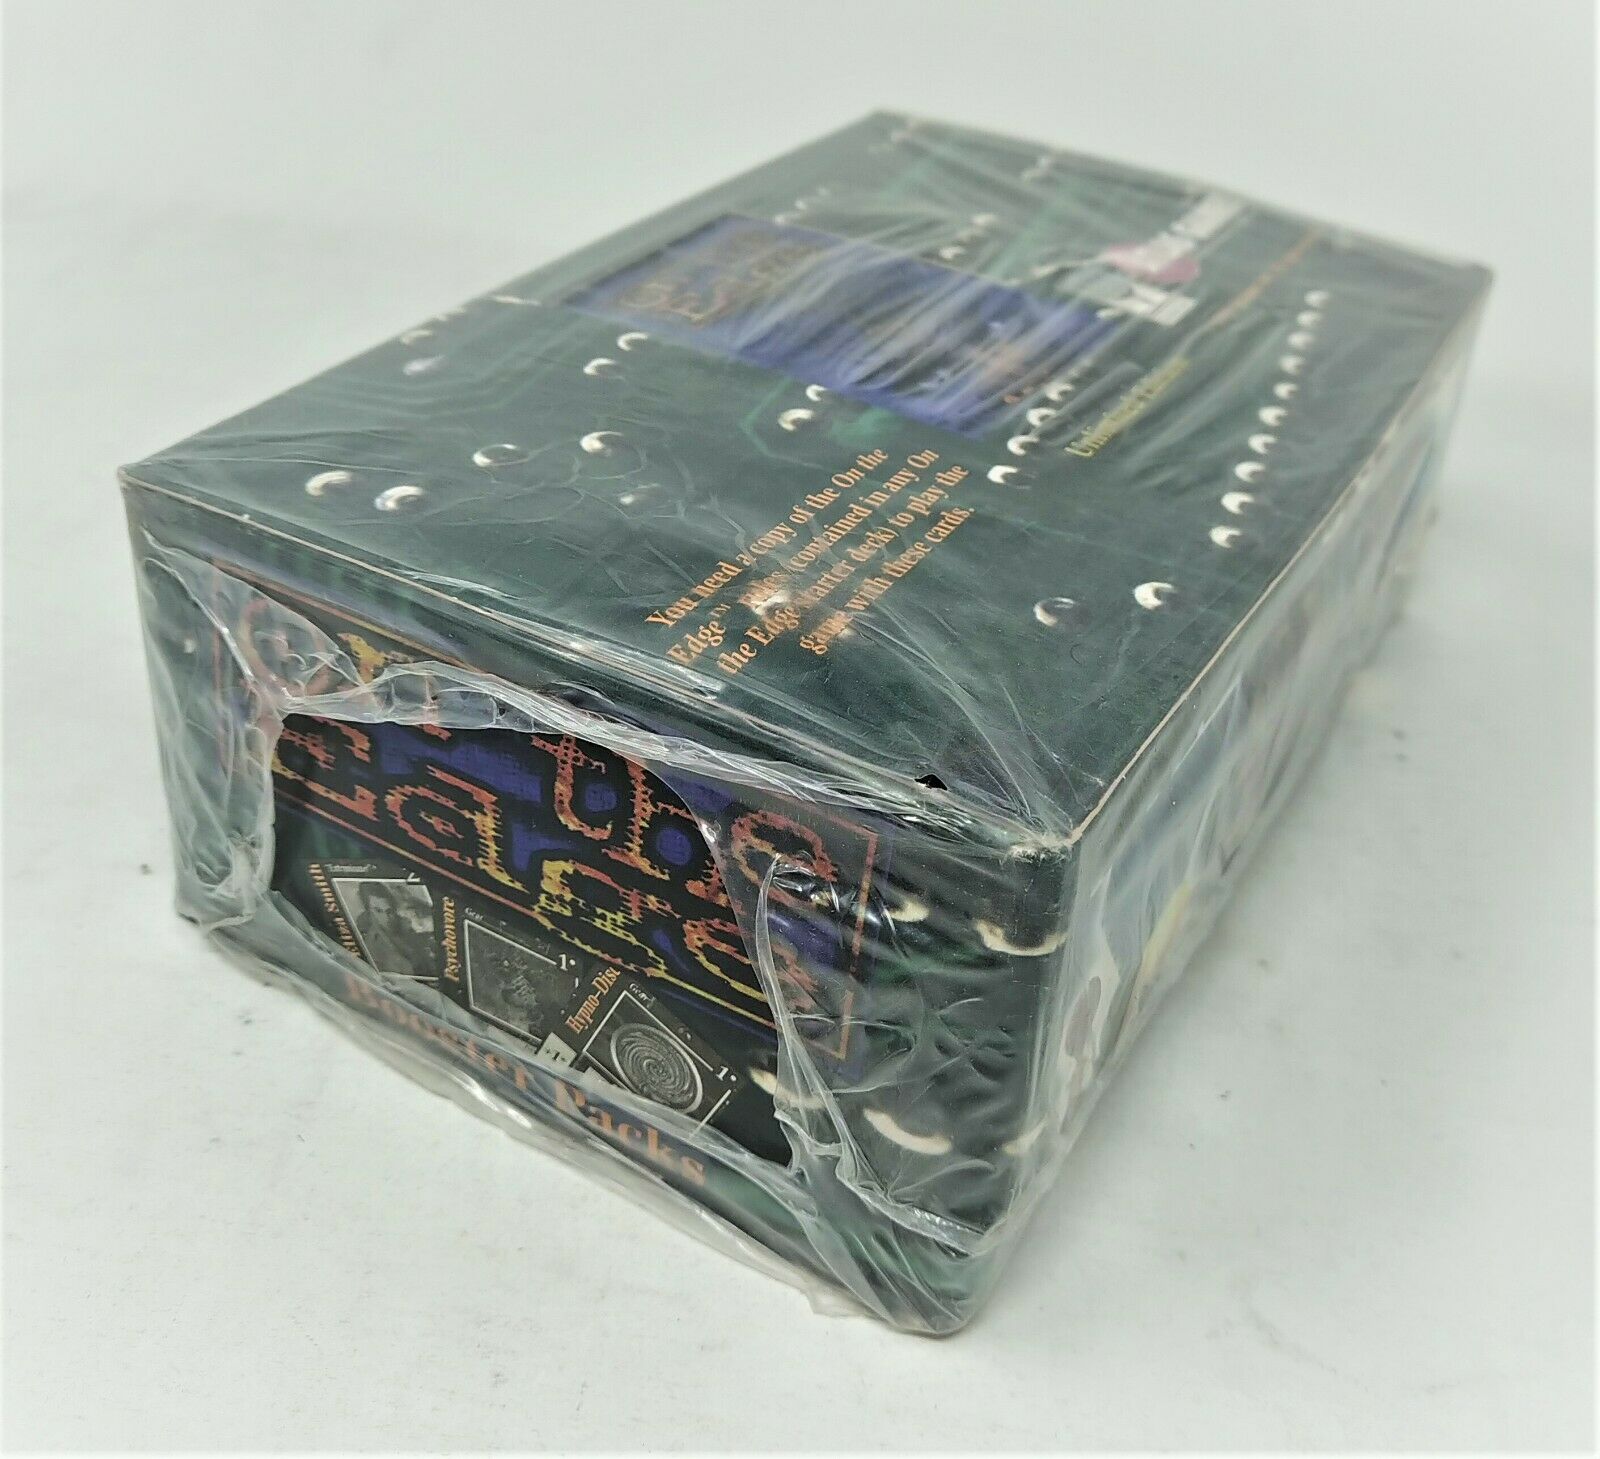 1994 On The Edge TCG Unlimited Edition 60 Packs Box - Miraj Trading